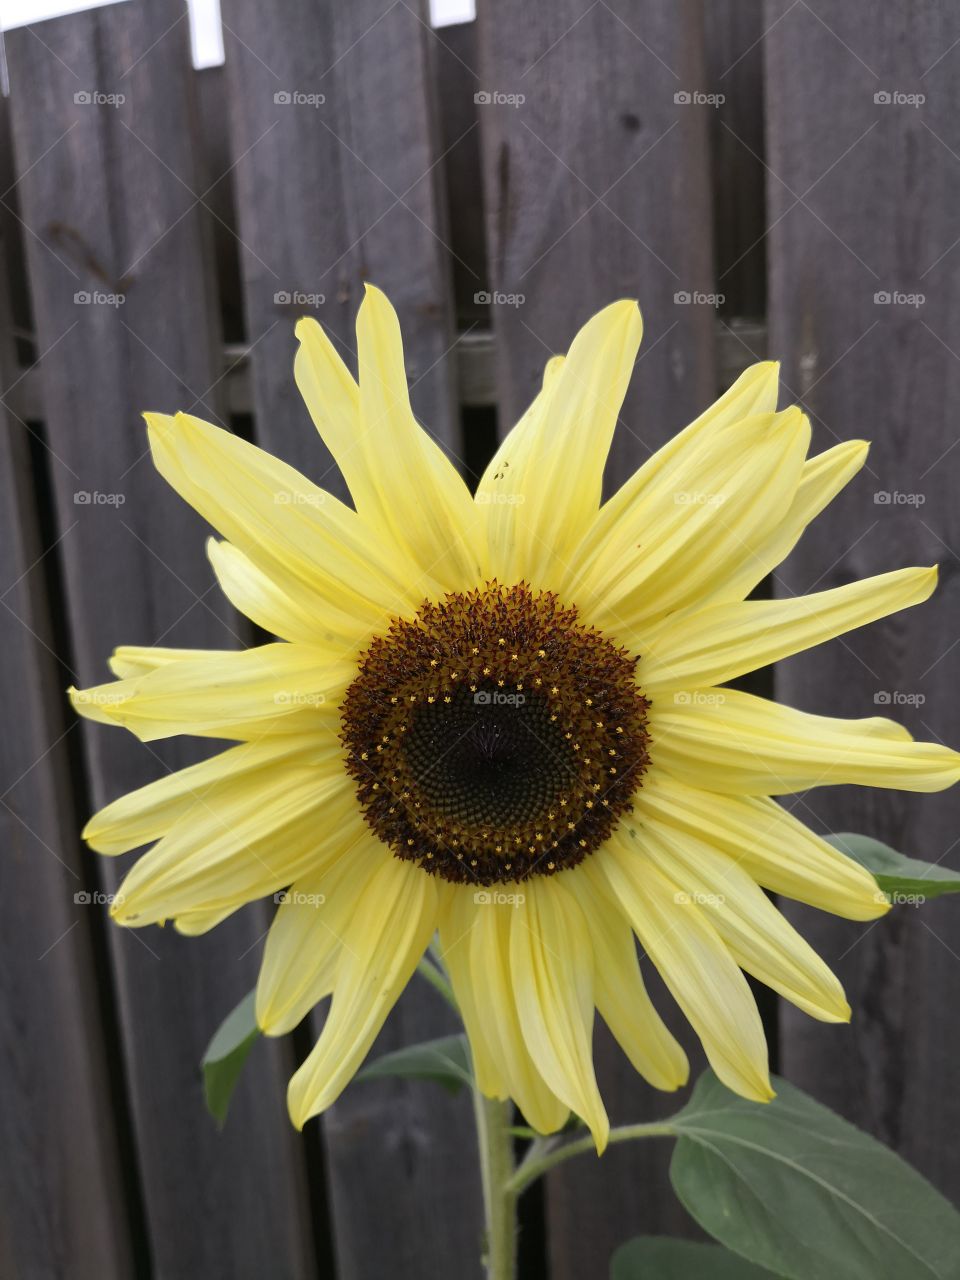 Pale sunflower